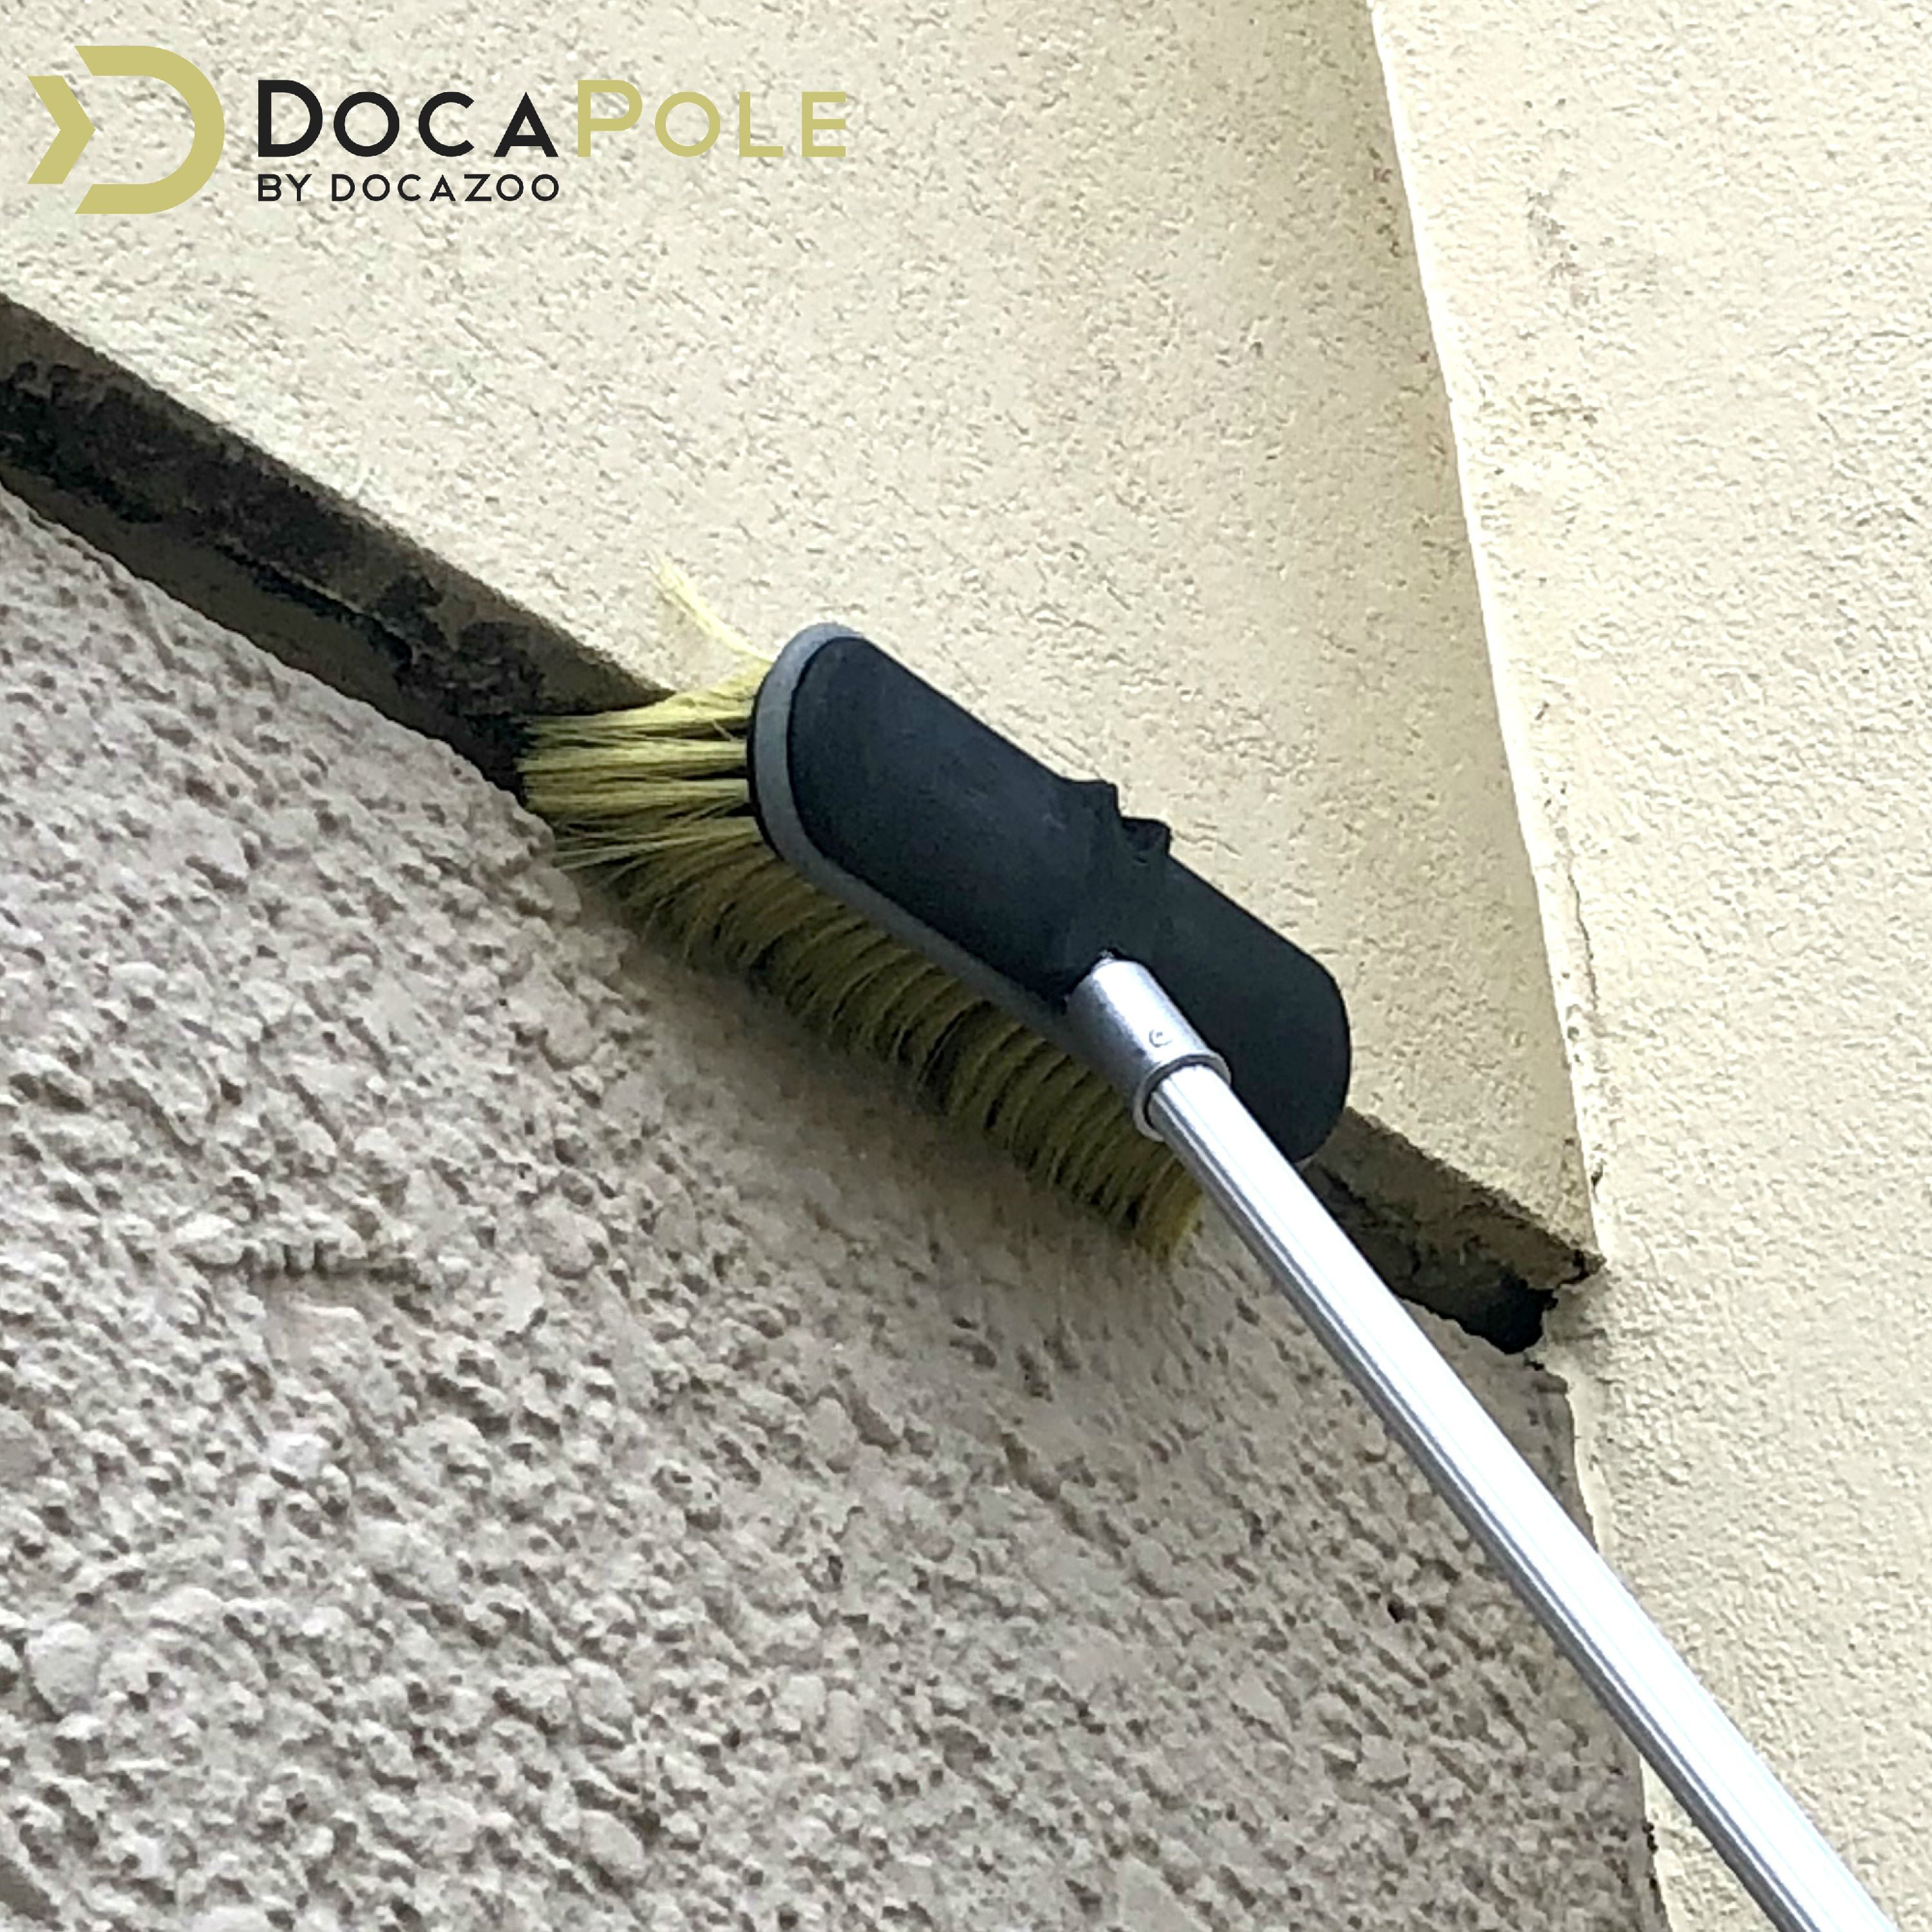 Docazoo DocaPole 7-30 Foot Hard Bristle Brush Extension Pole, 11â€ Scrub  Brush with Telescopic Pole